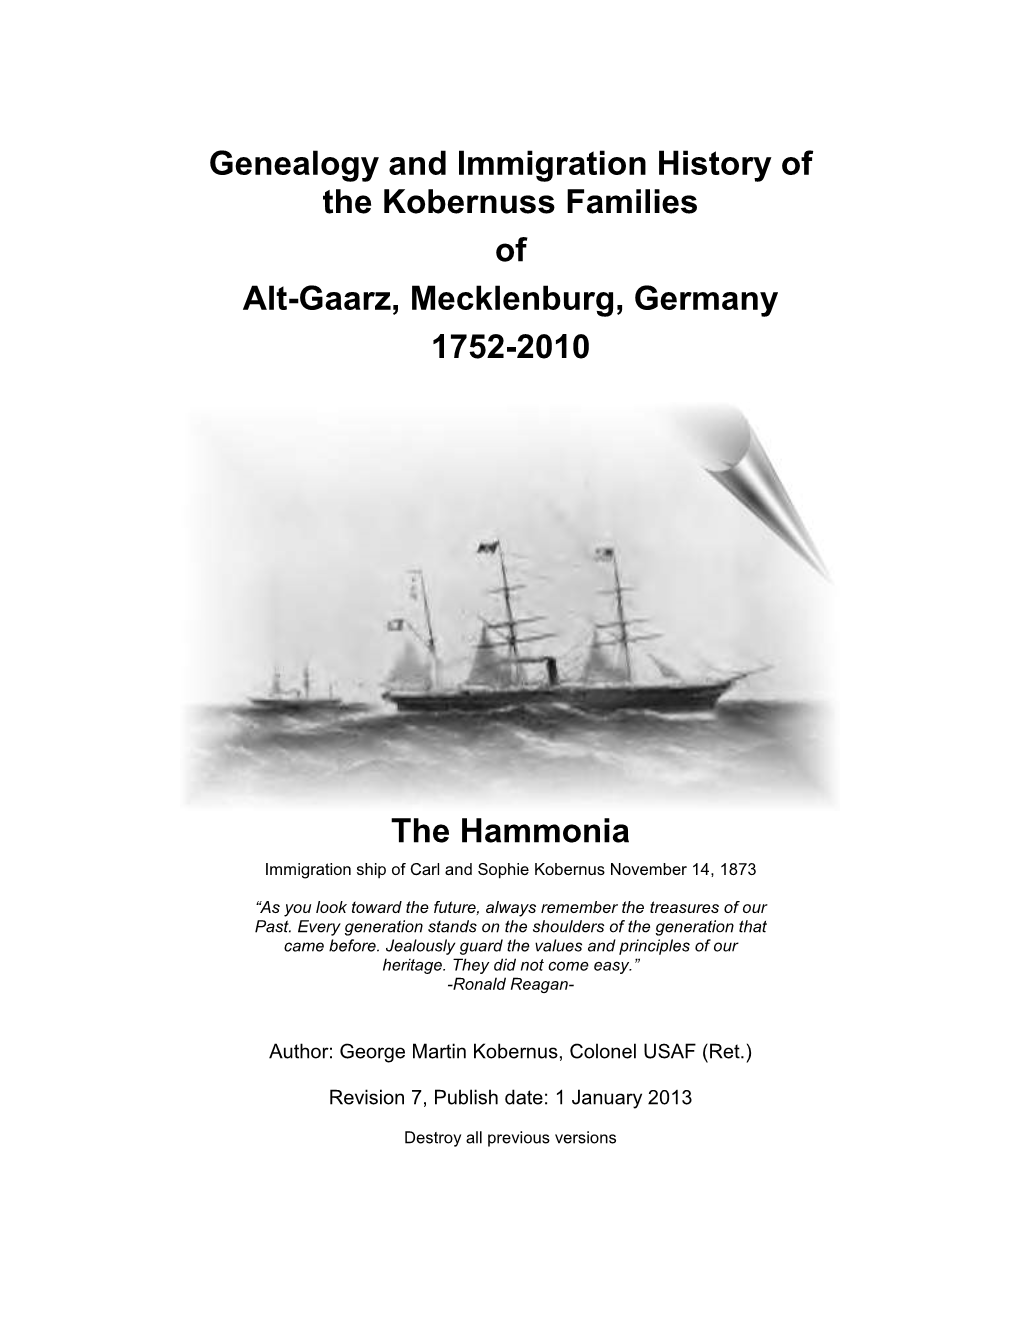 Genealogy of the Kobernuss Families of Alt-Gaarz Mecklenburg